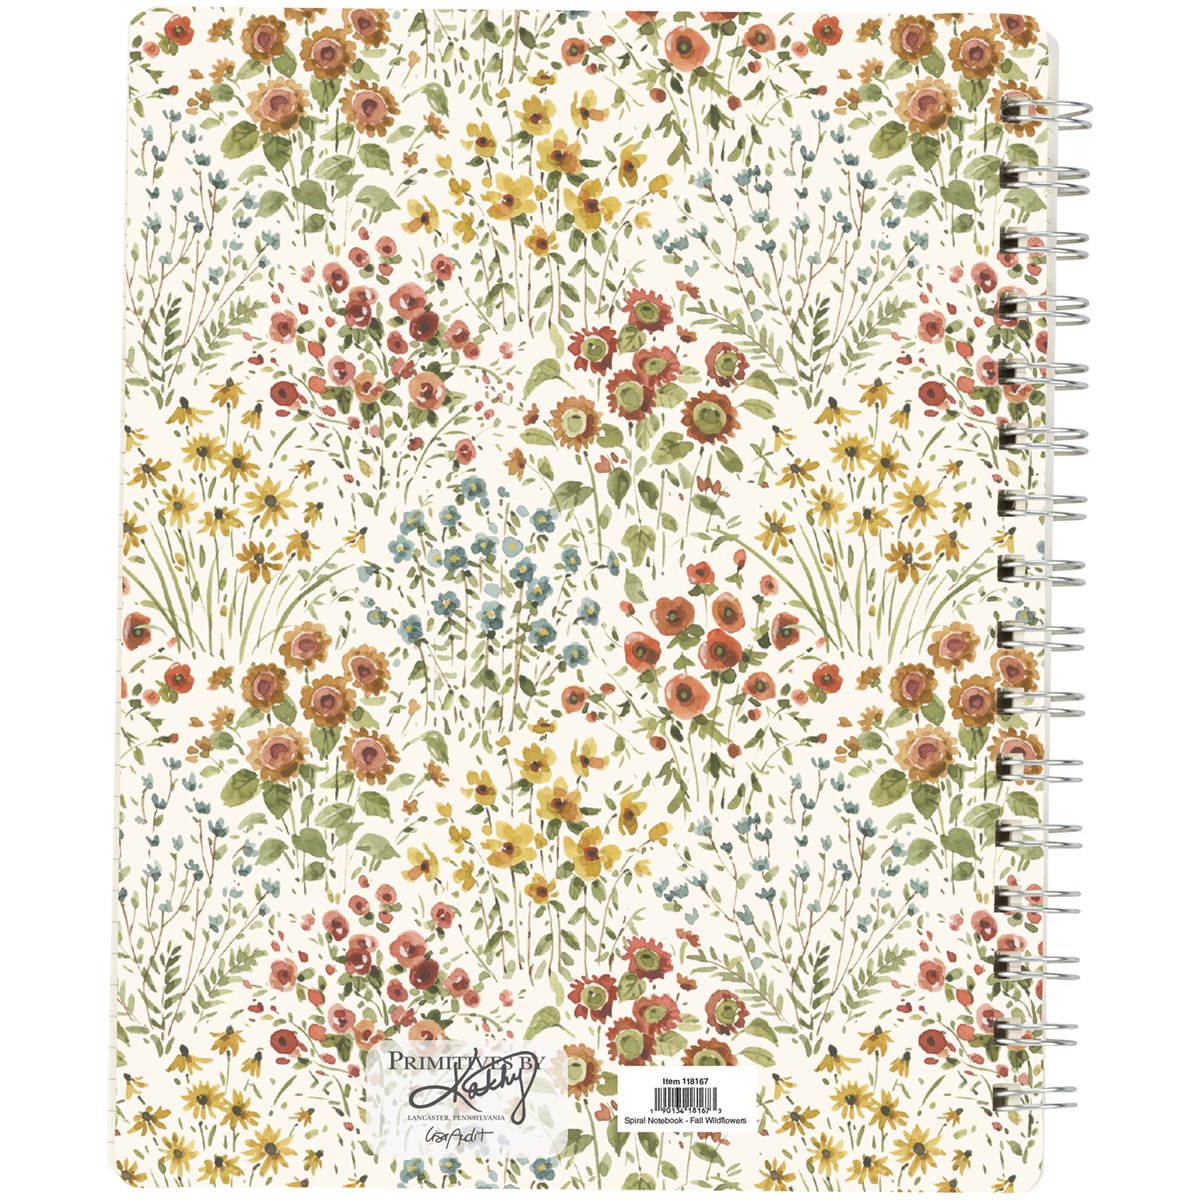 Fall Wildflower Spiral Notebook - Paper, Metal